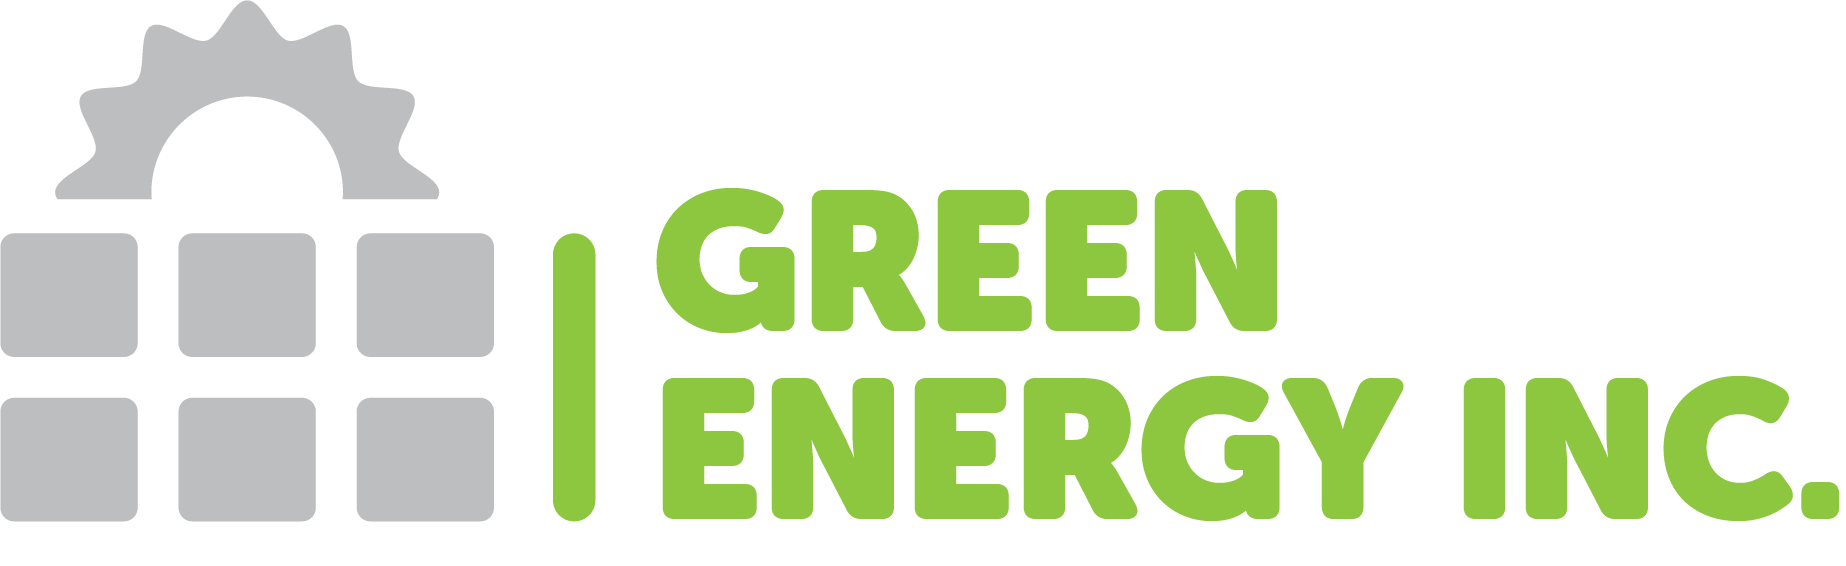 Green Energy Inc. logo